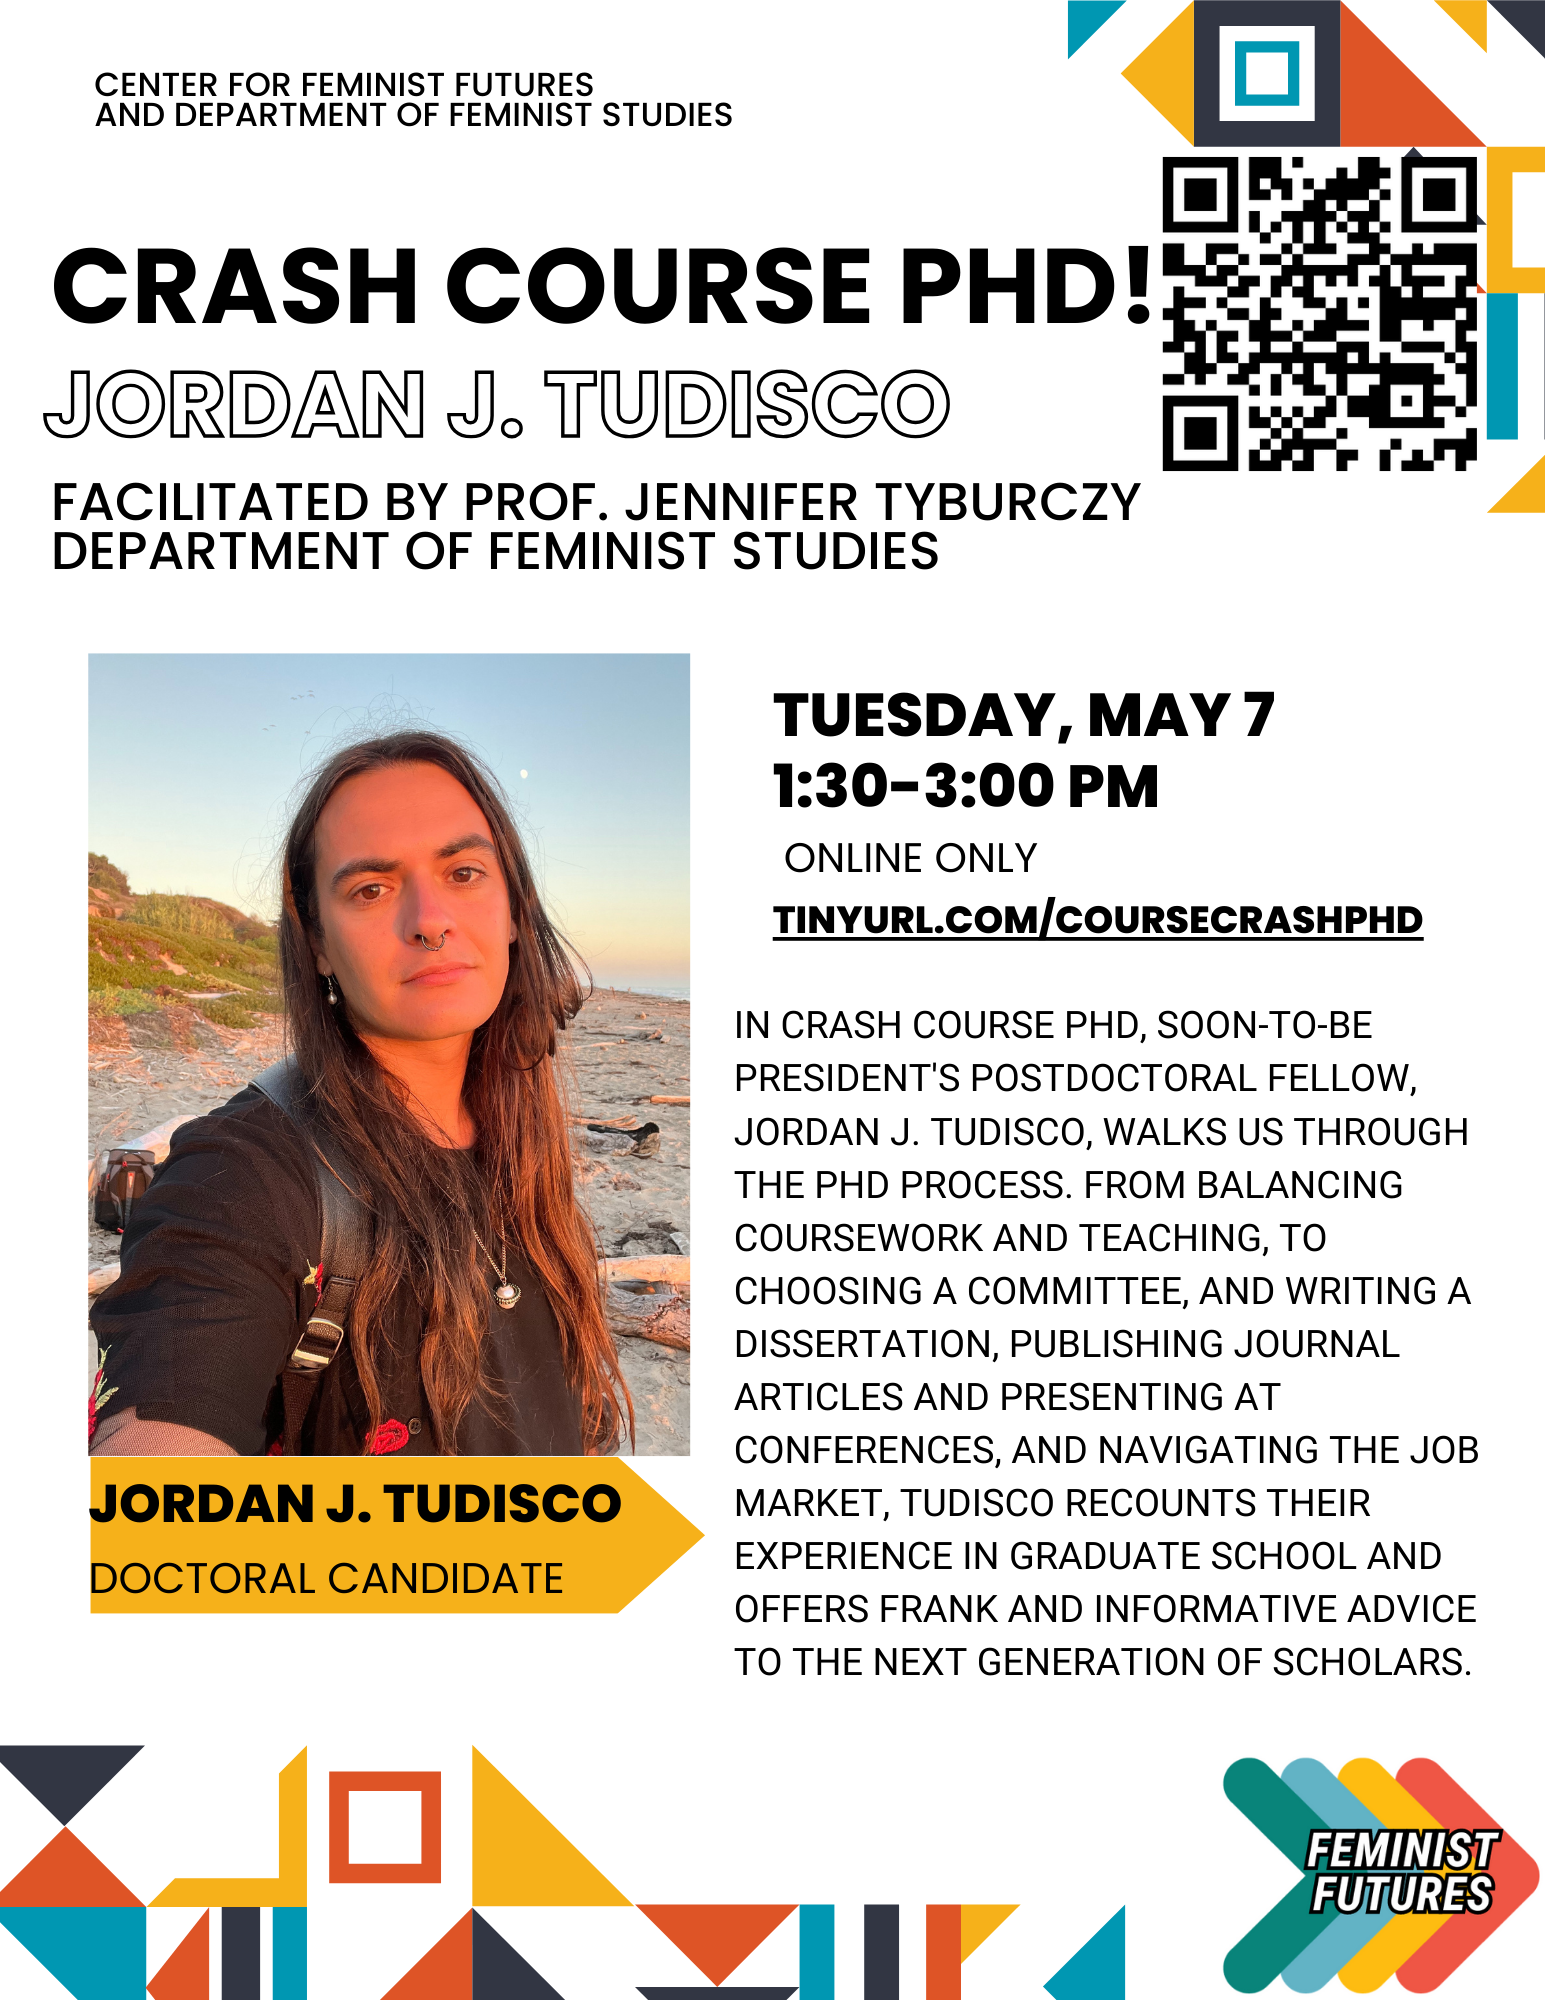 Crash Course PhD! with Doctoral Candidate Jordan J. Tudisco facilitated by Dr. Jennifer Tyburczy (Feminist Studies)